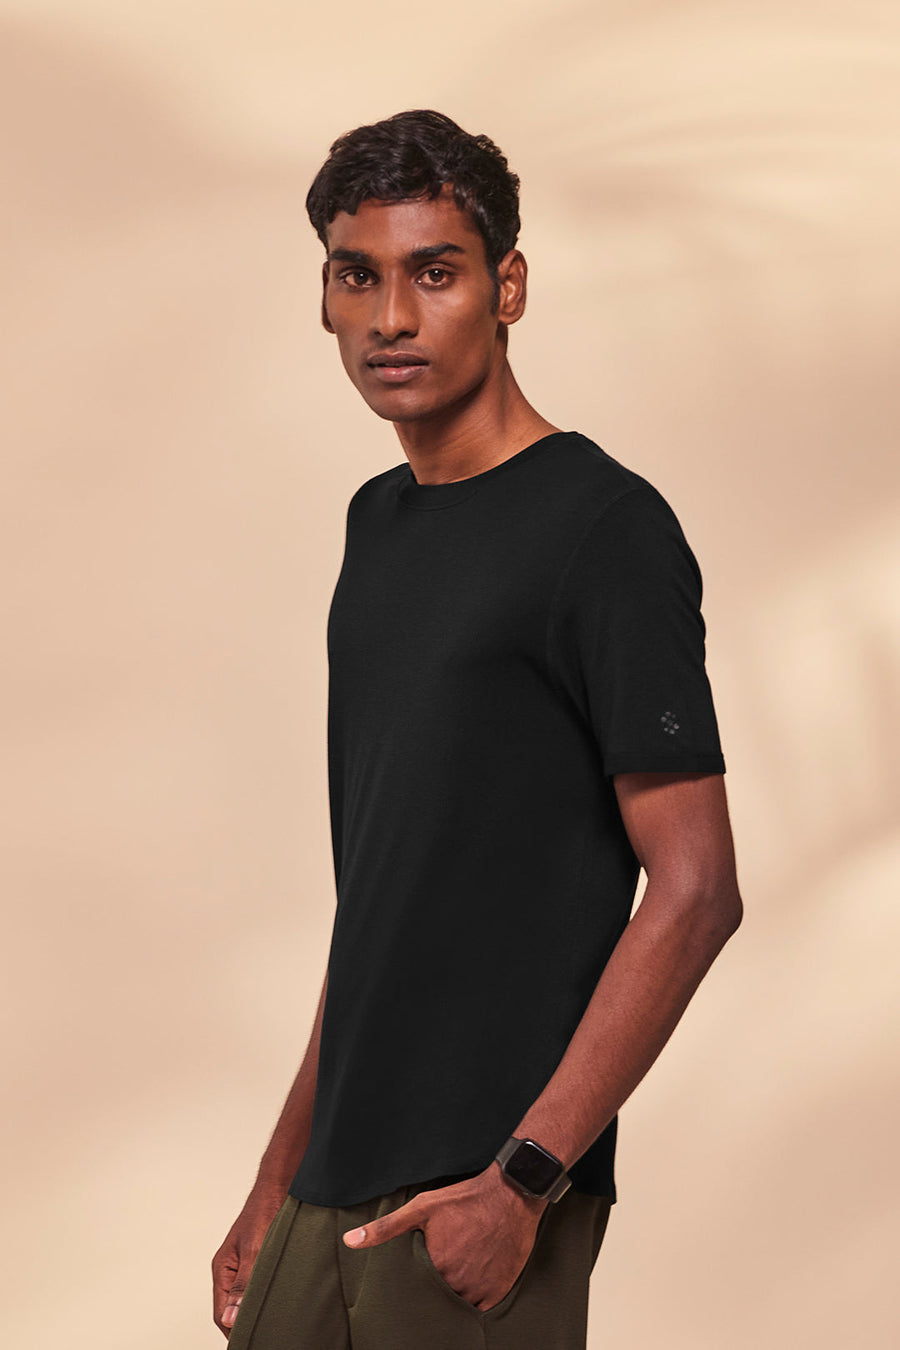 Smooth & Easy T-shirt Black - Sensing